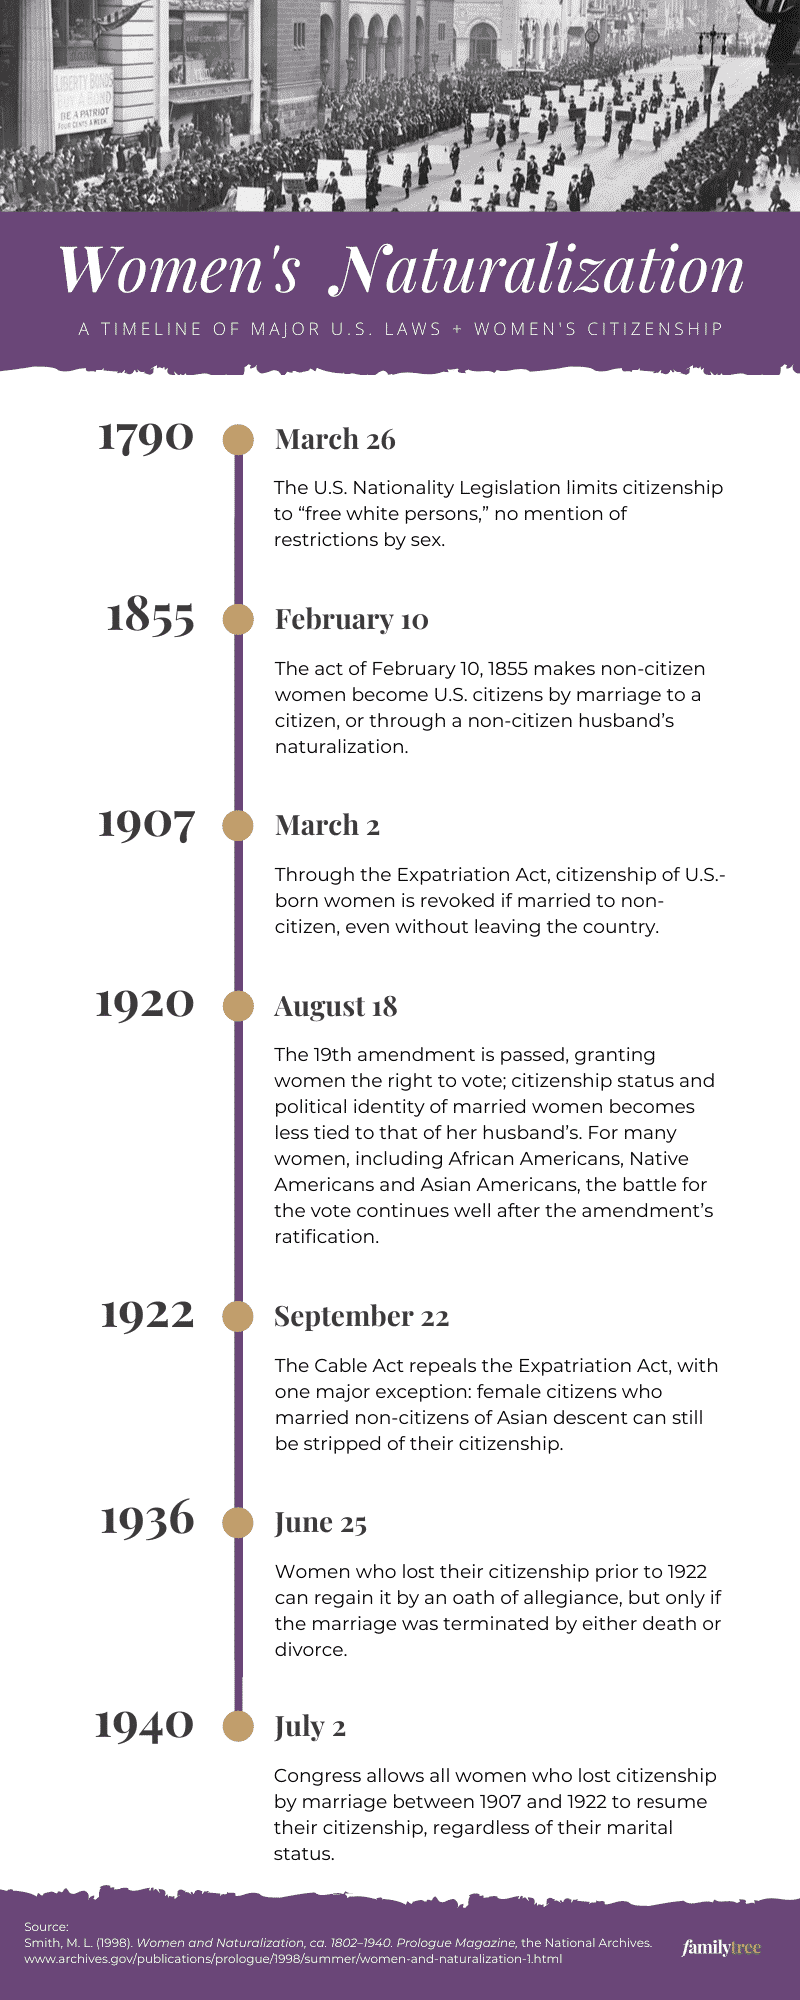 Women's Naturalization Timeline